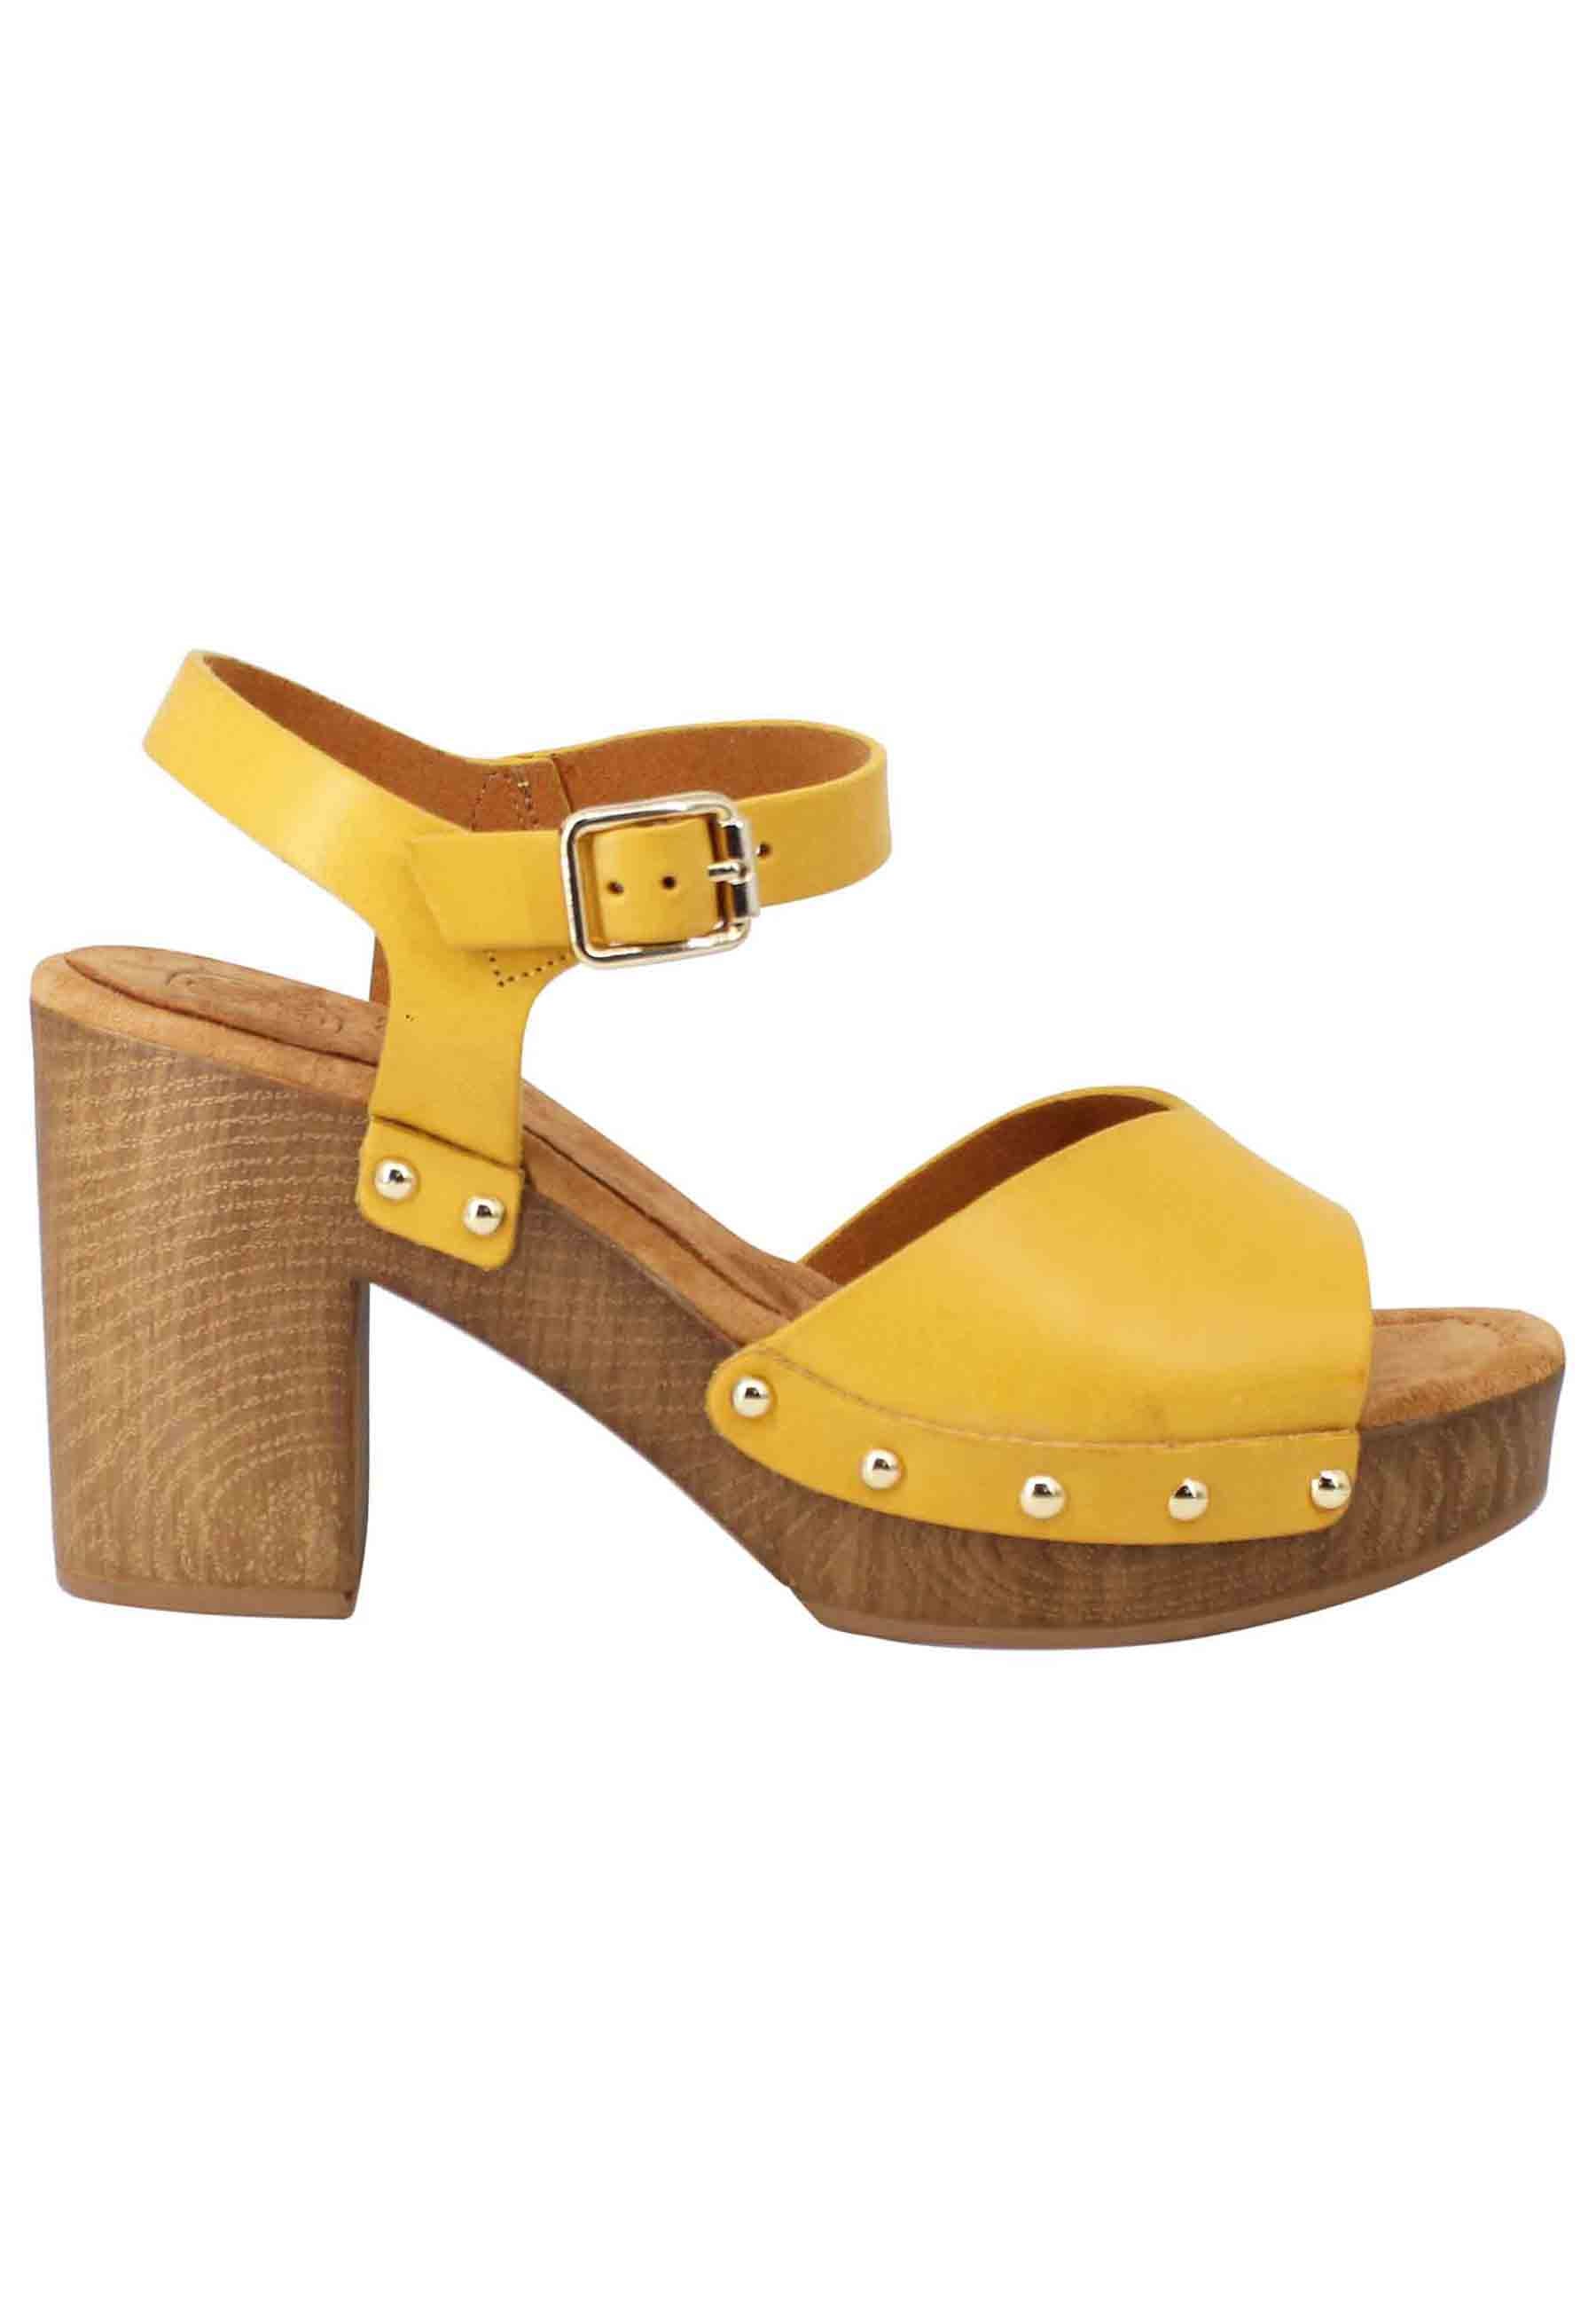 Women's high heel yellow leather clog sandals